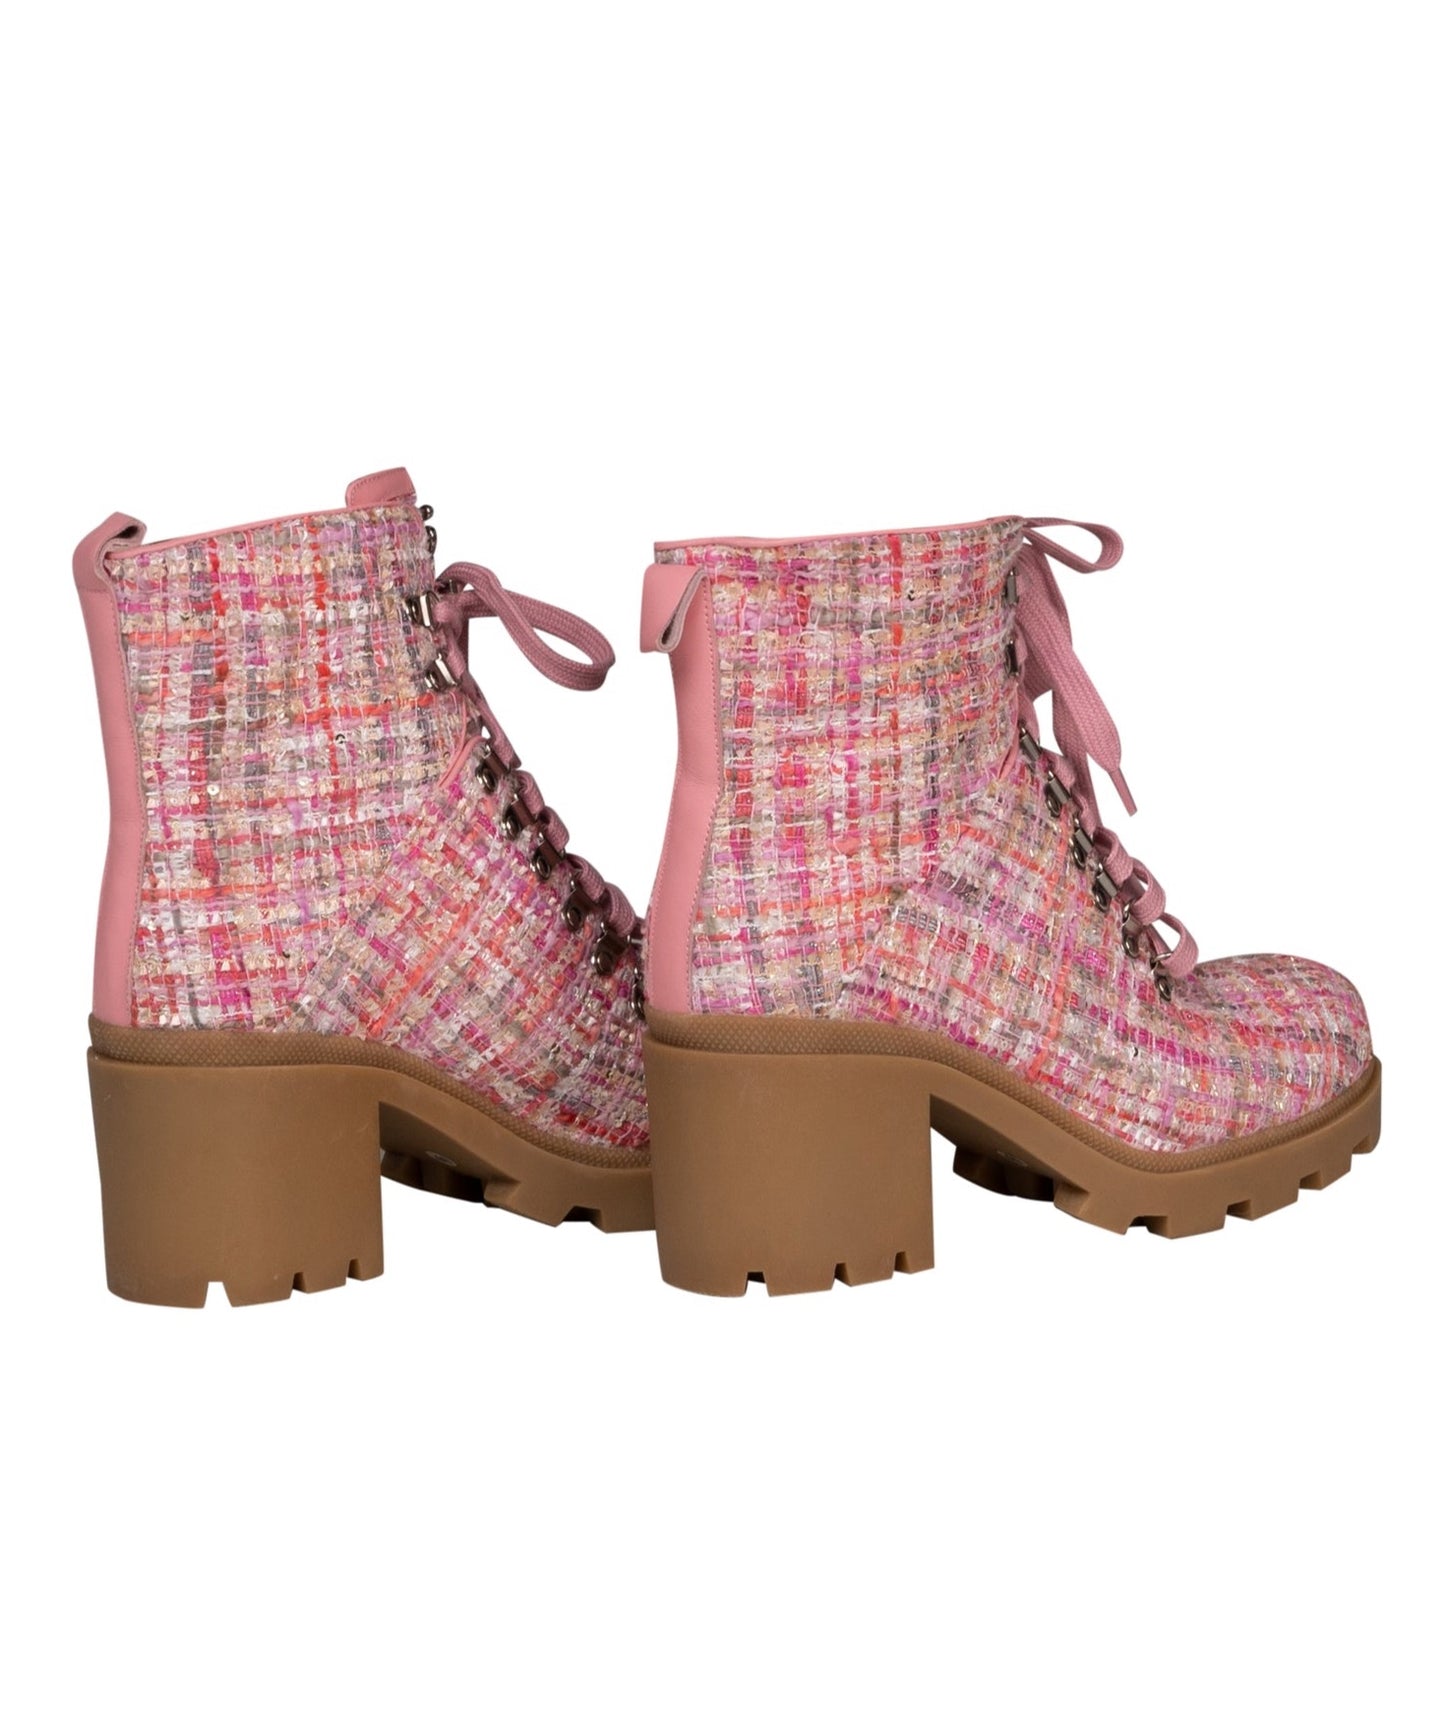 Clueless Boots Pink